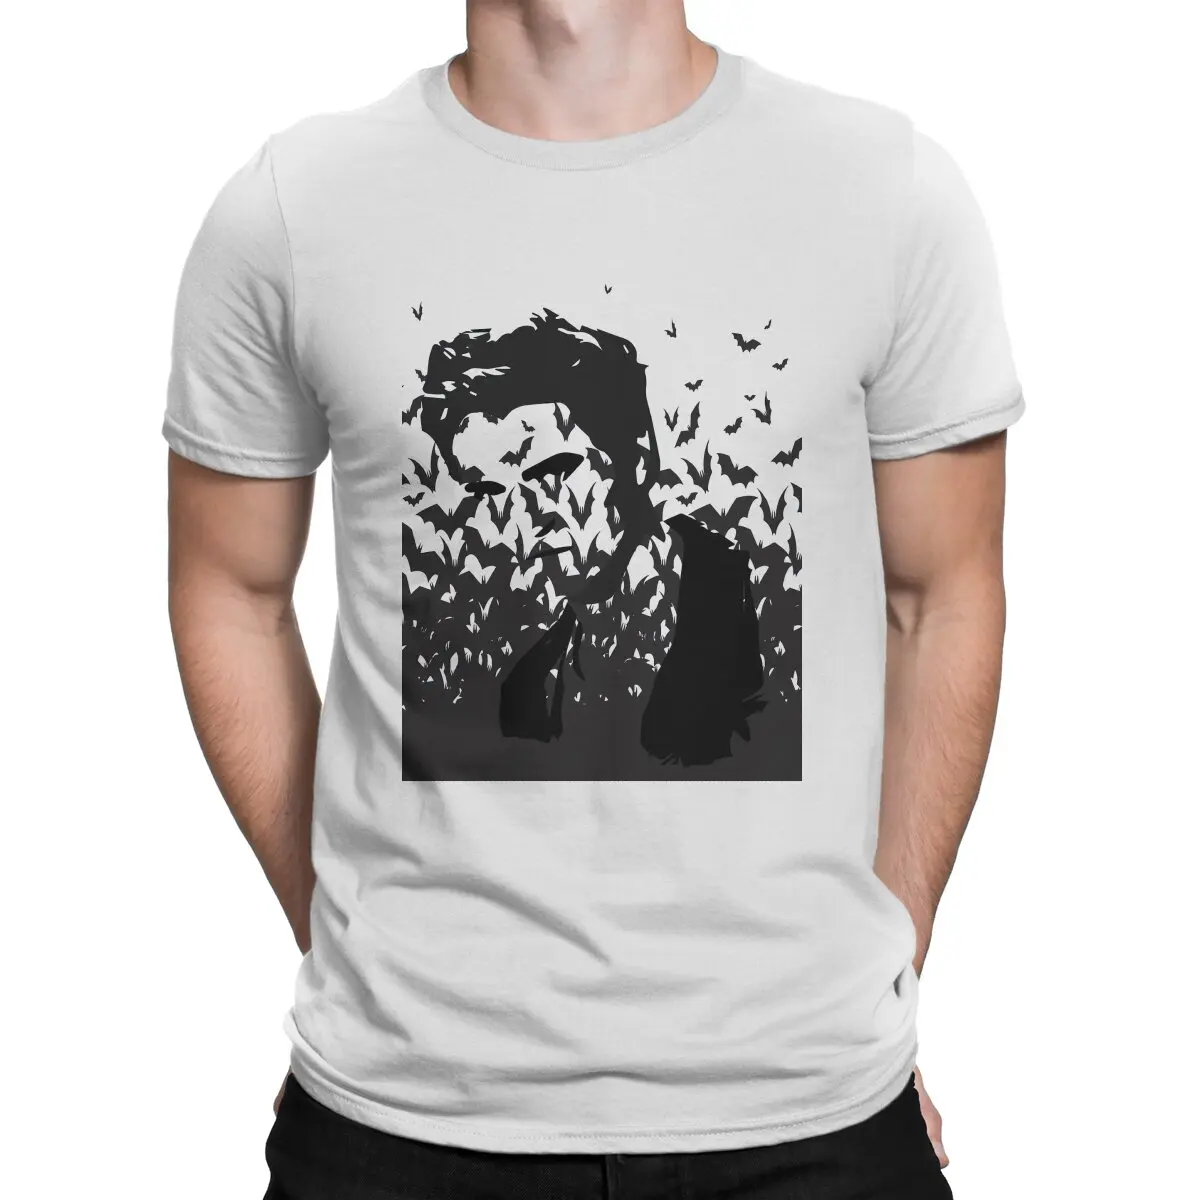 

Cool T Shirts Men's 100% Cotton Humor T-Shirt Round Neck Robert Pattinson Famous British Actor Tee Shirt Short Sleeve Clothes